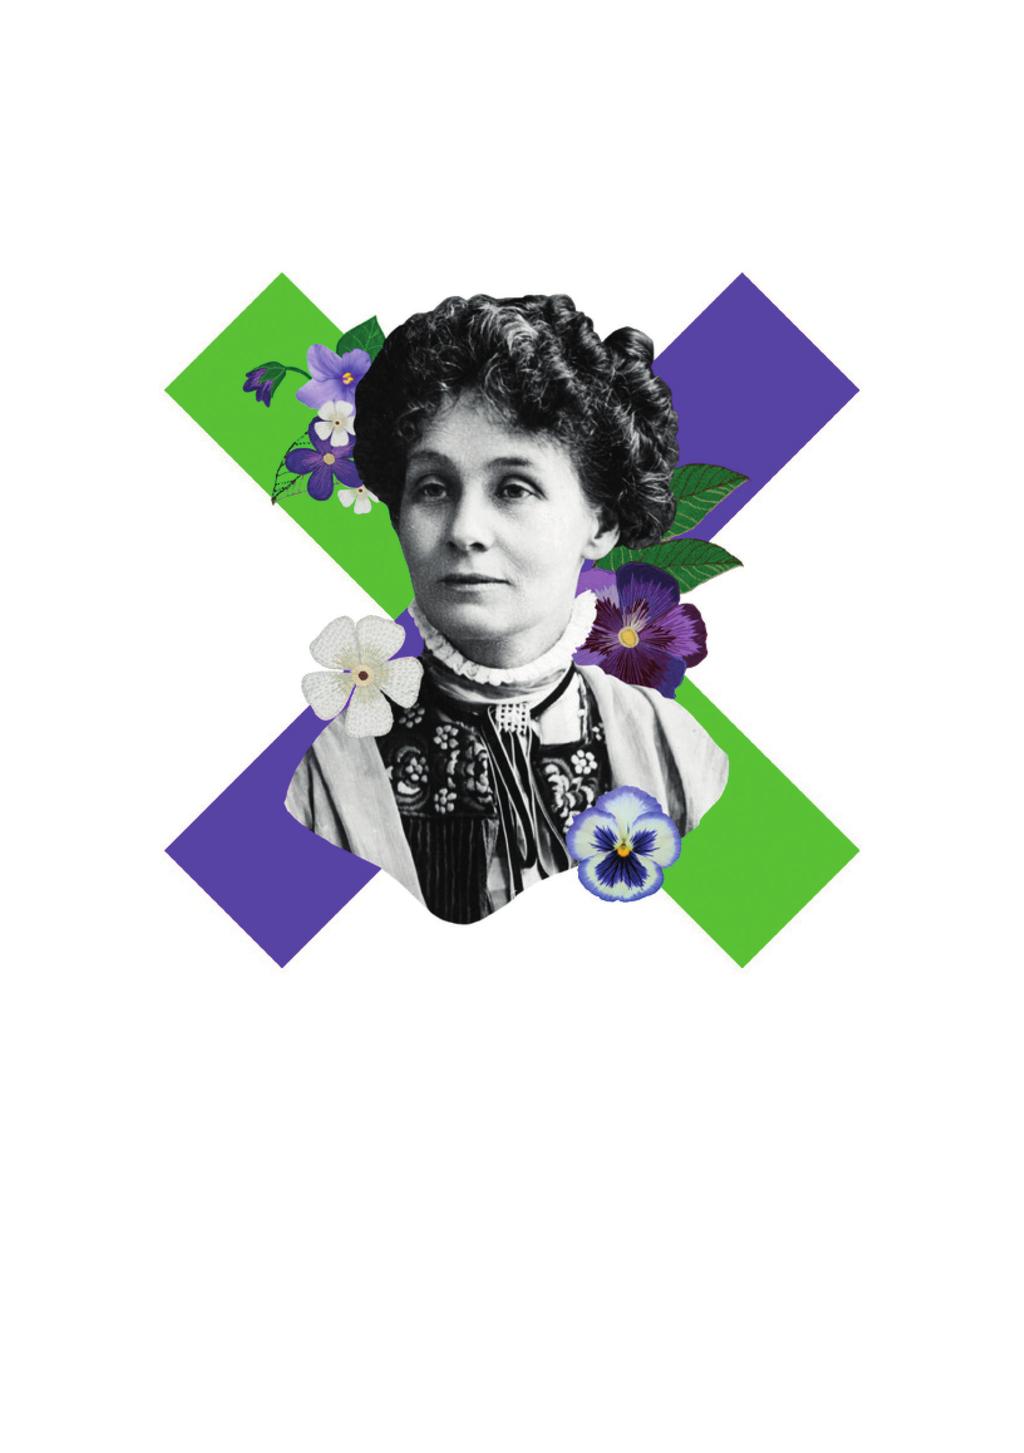 Emmeline Pankhurst, activist and leader of the British